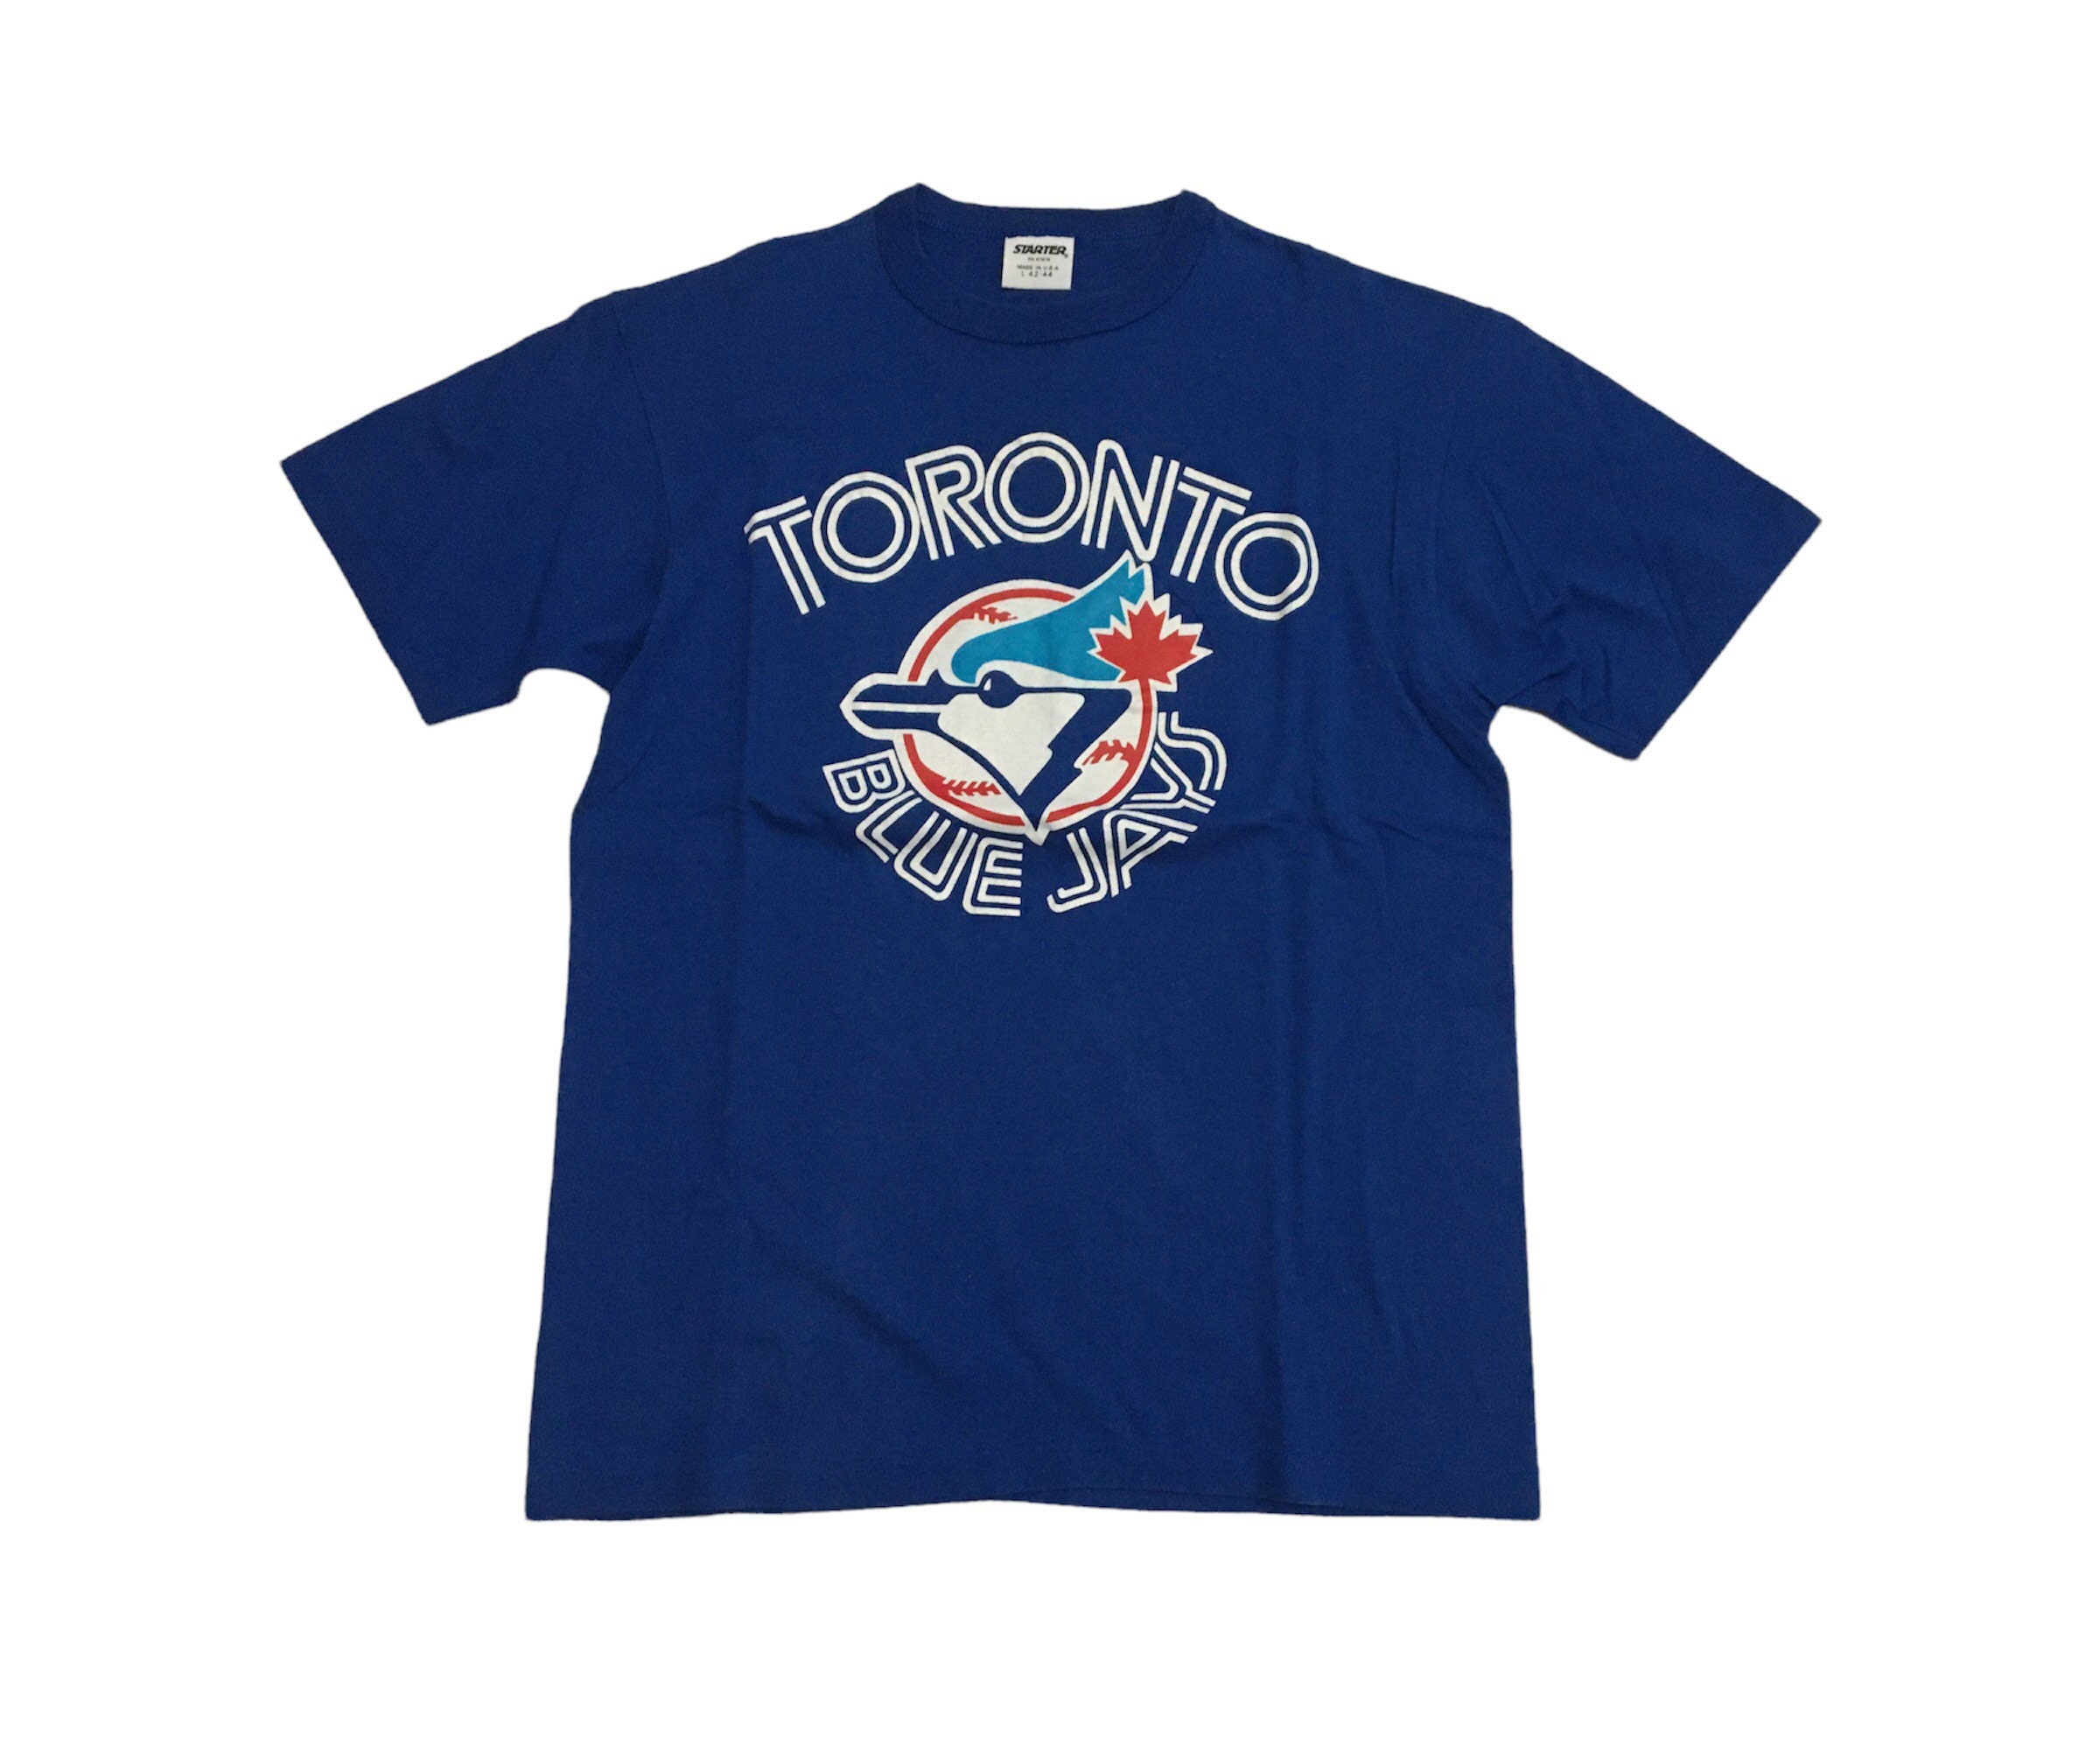 Vintage Toronto Blue Jays T-shirt 